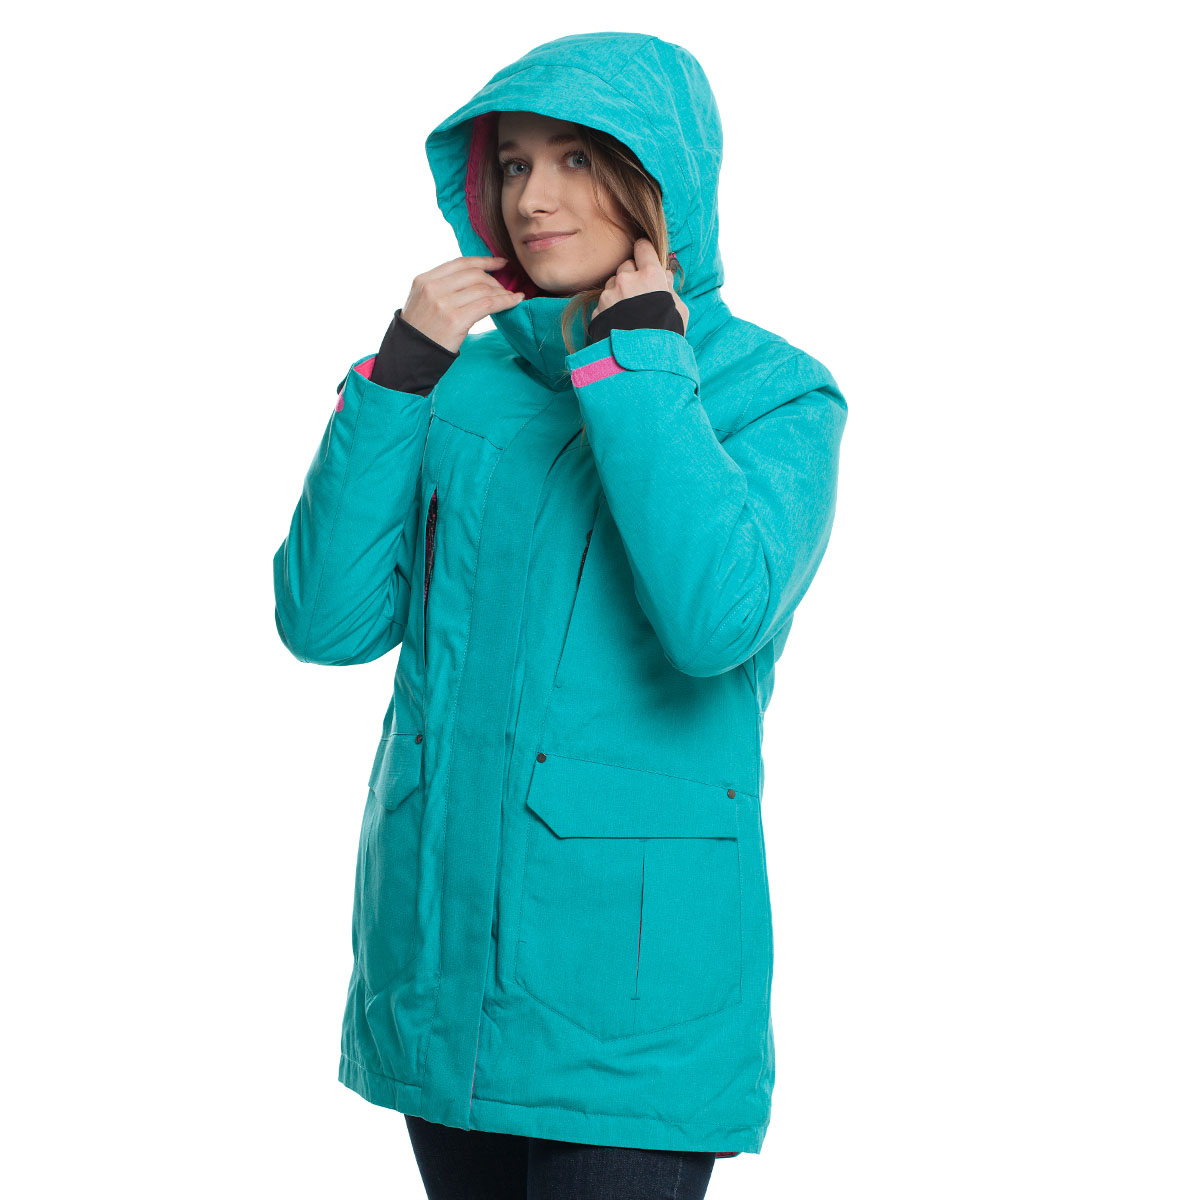 Куртка WHS женская зимняя голубая. WHS куртка женская зимняя утепленная. WHS куртка зеленая. WHS куртка женская пестрая. Полиэфир куртка